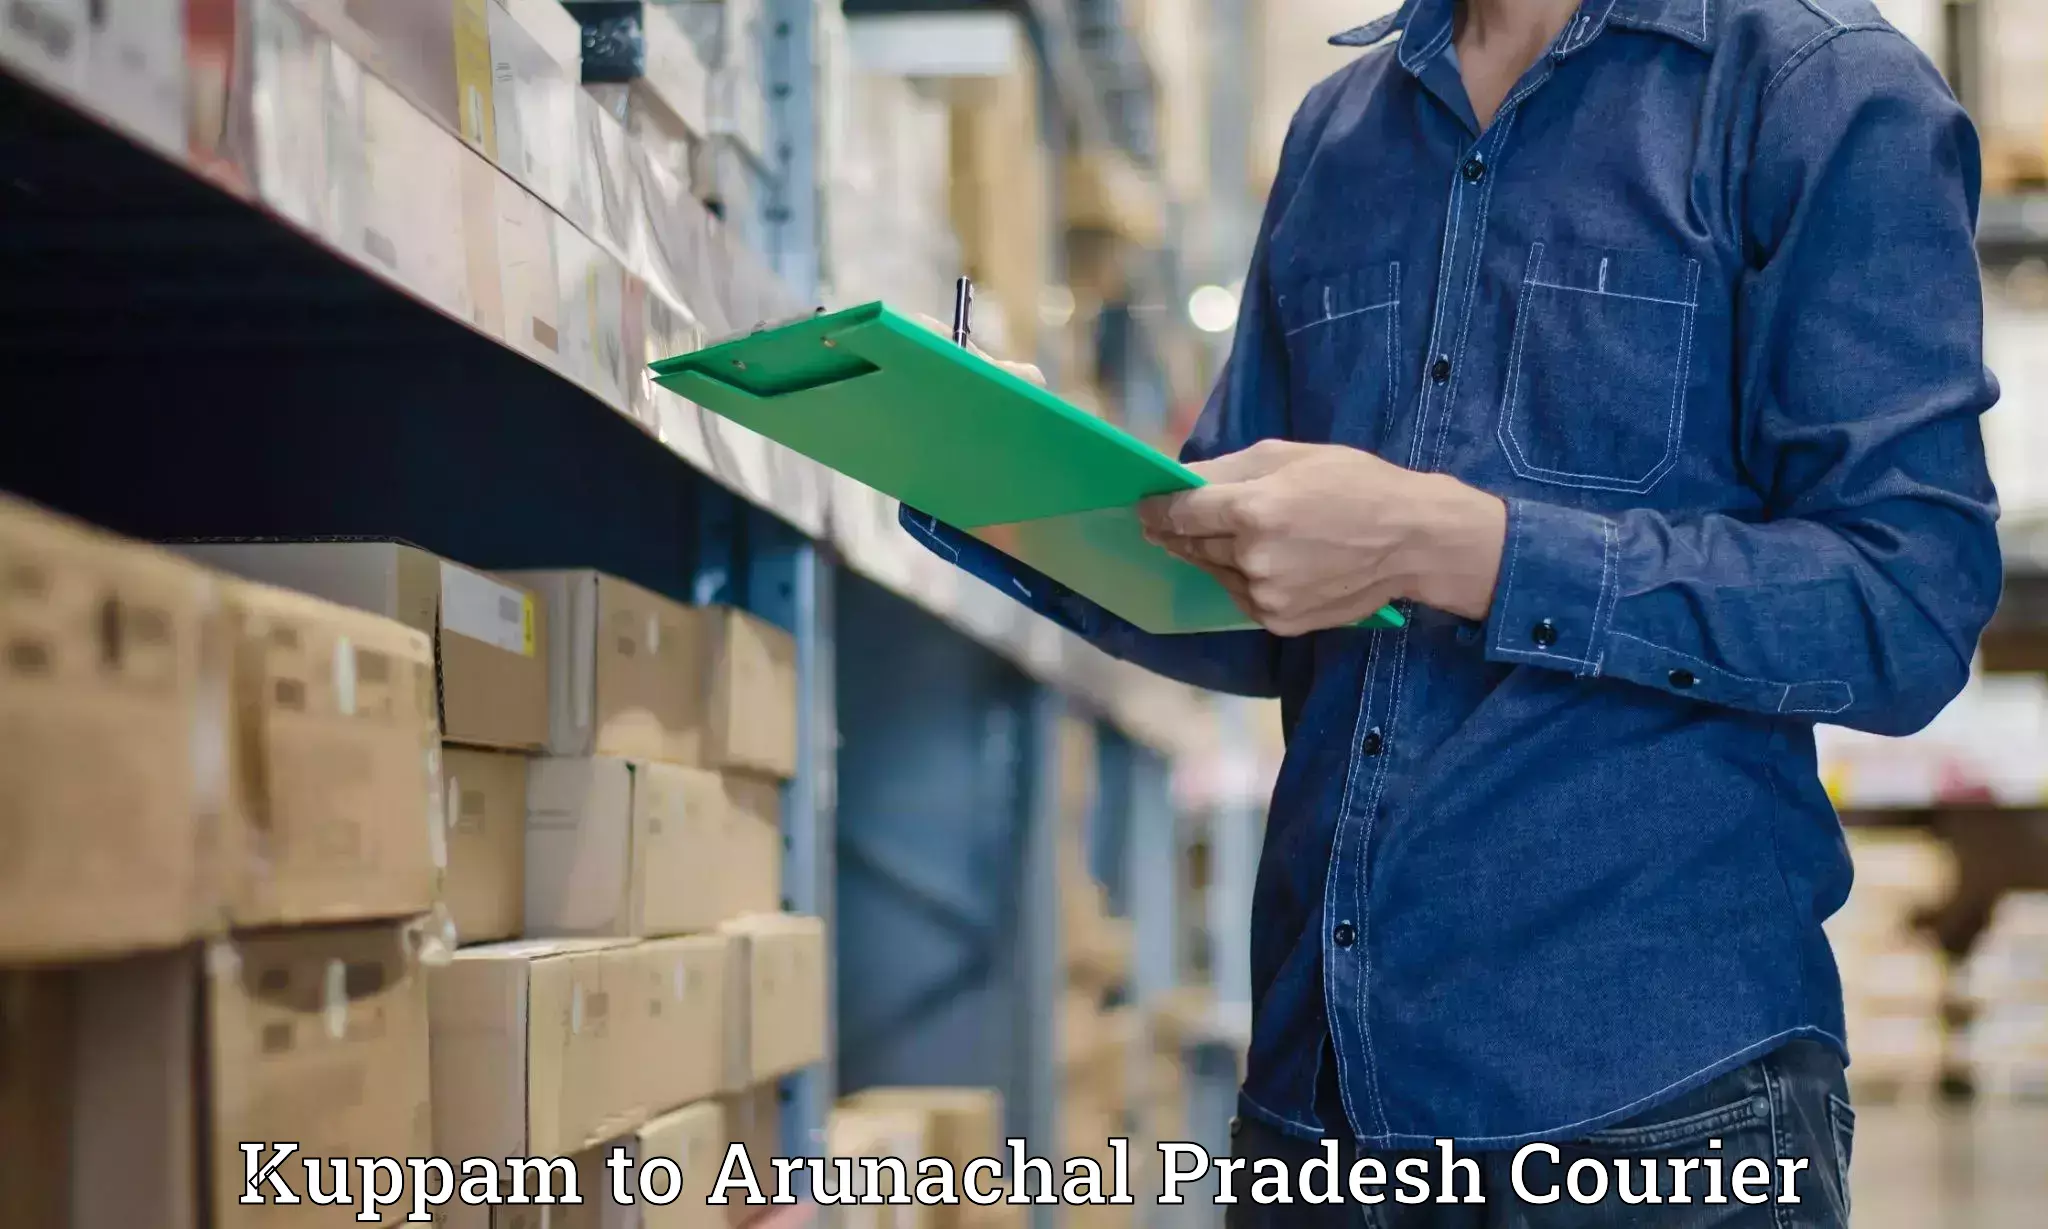 Courier service partnerships Kuppam to Arunachal Pradesh